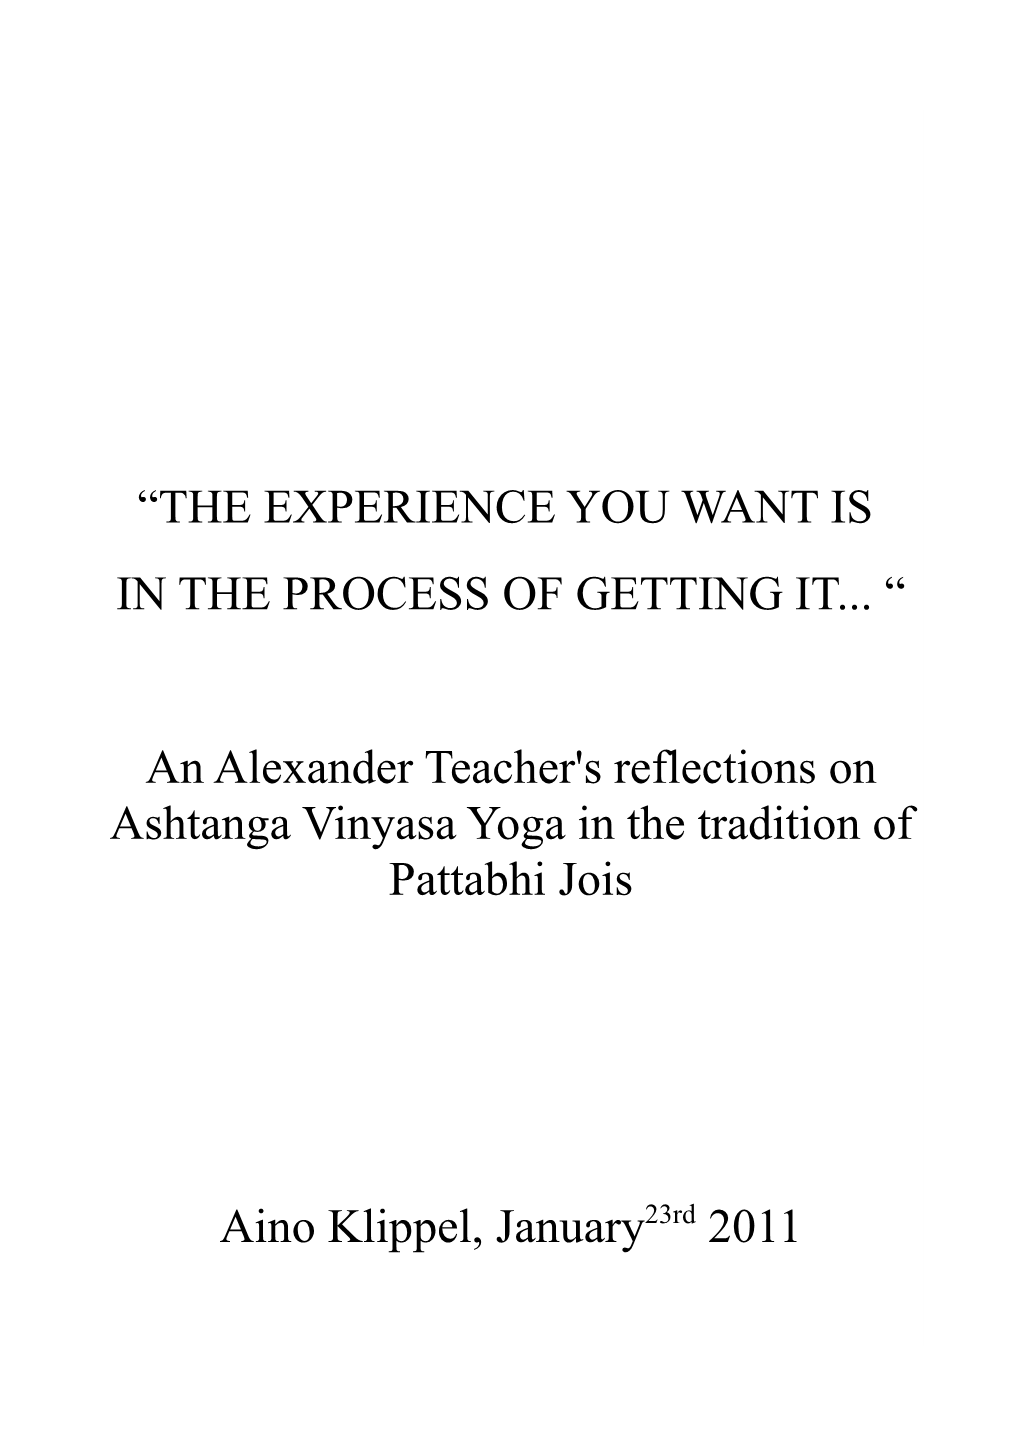 The Alexander Technique and Ashtanga Vinyasa Yoga